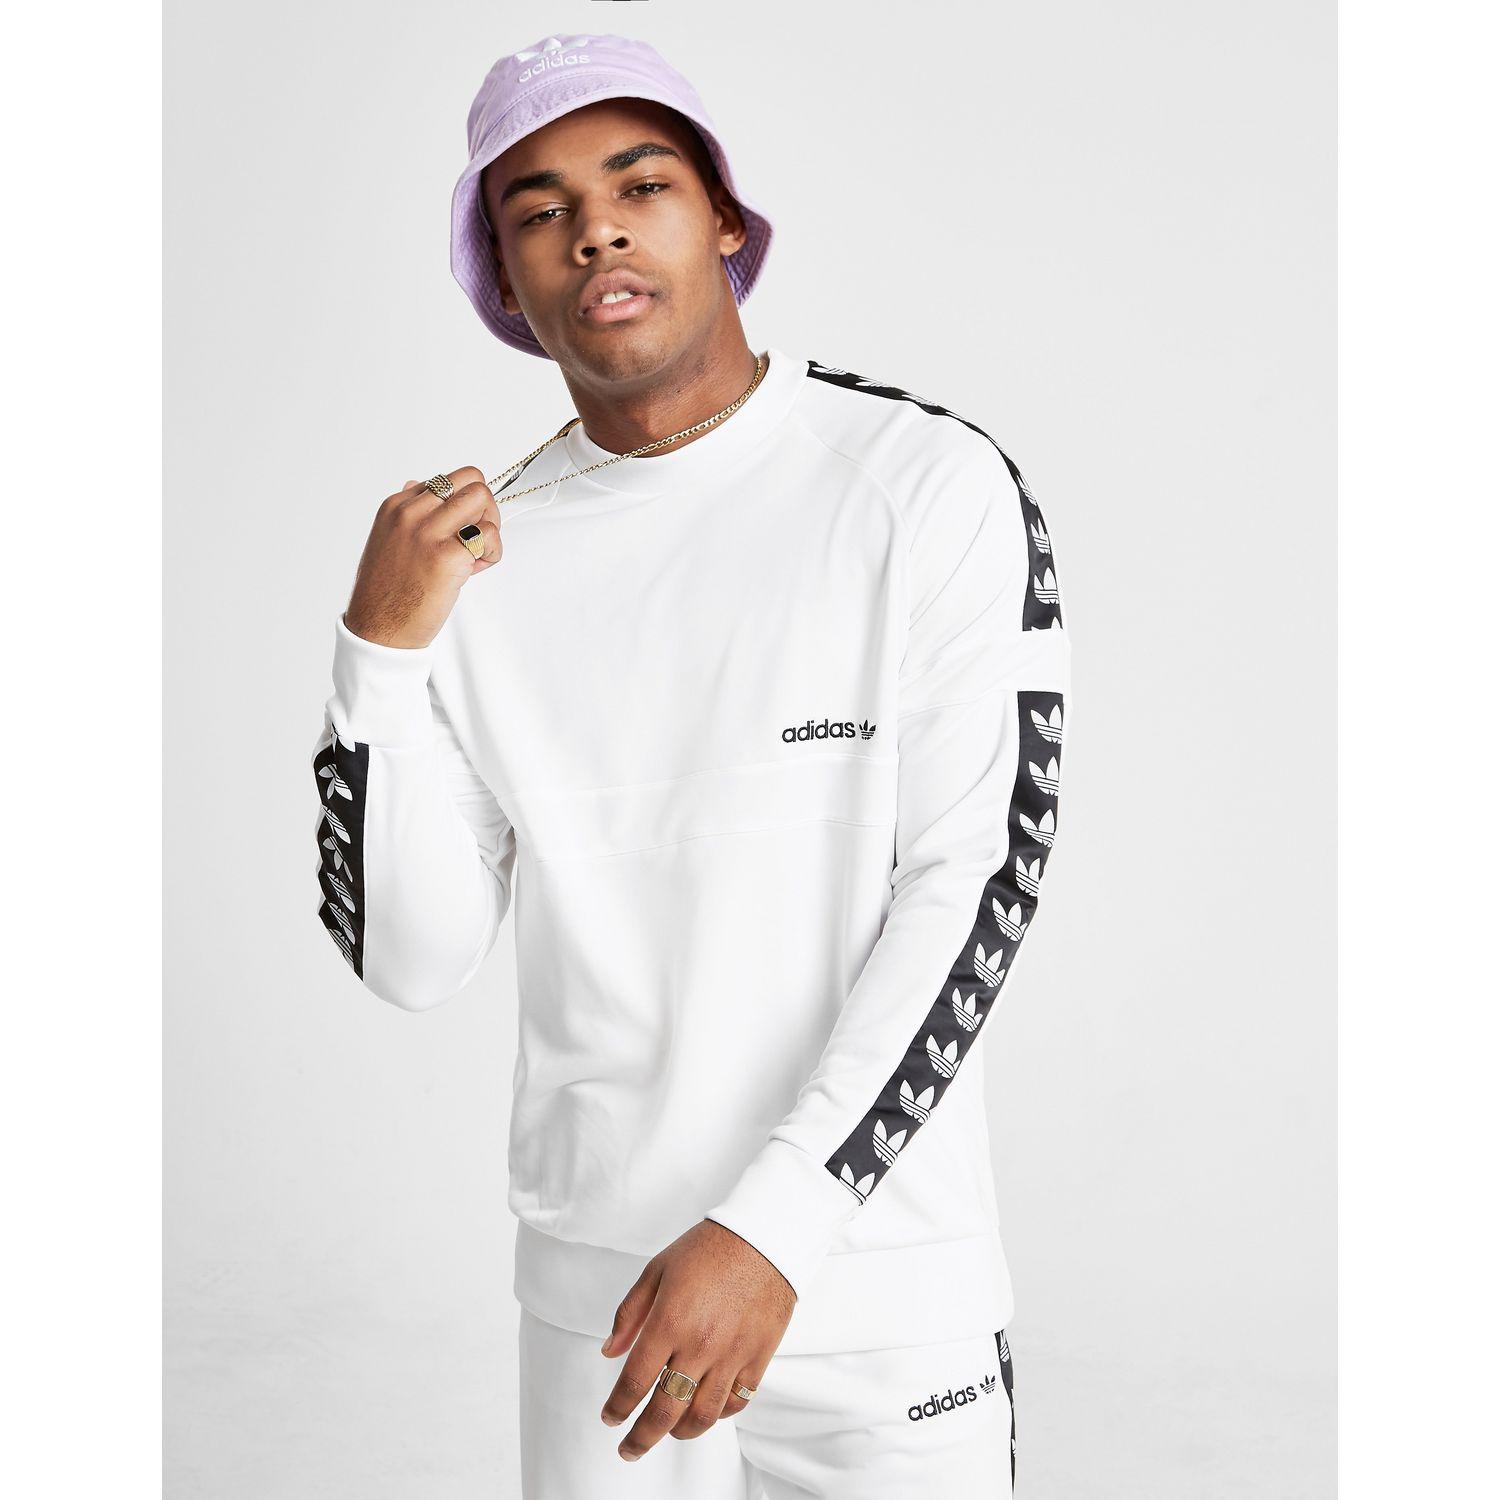 Adidas Originals Tape Itasca Crew Sweatshirt Flash Sales, 52% OFF |  reialcercleartistic.cat